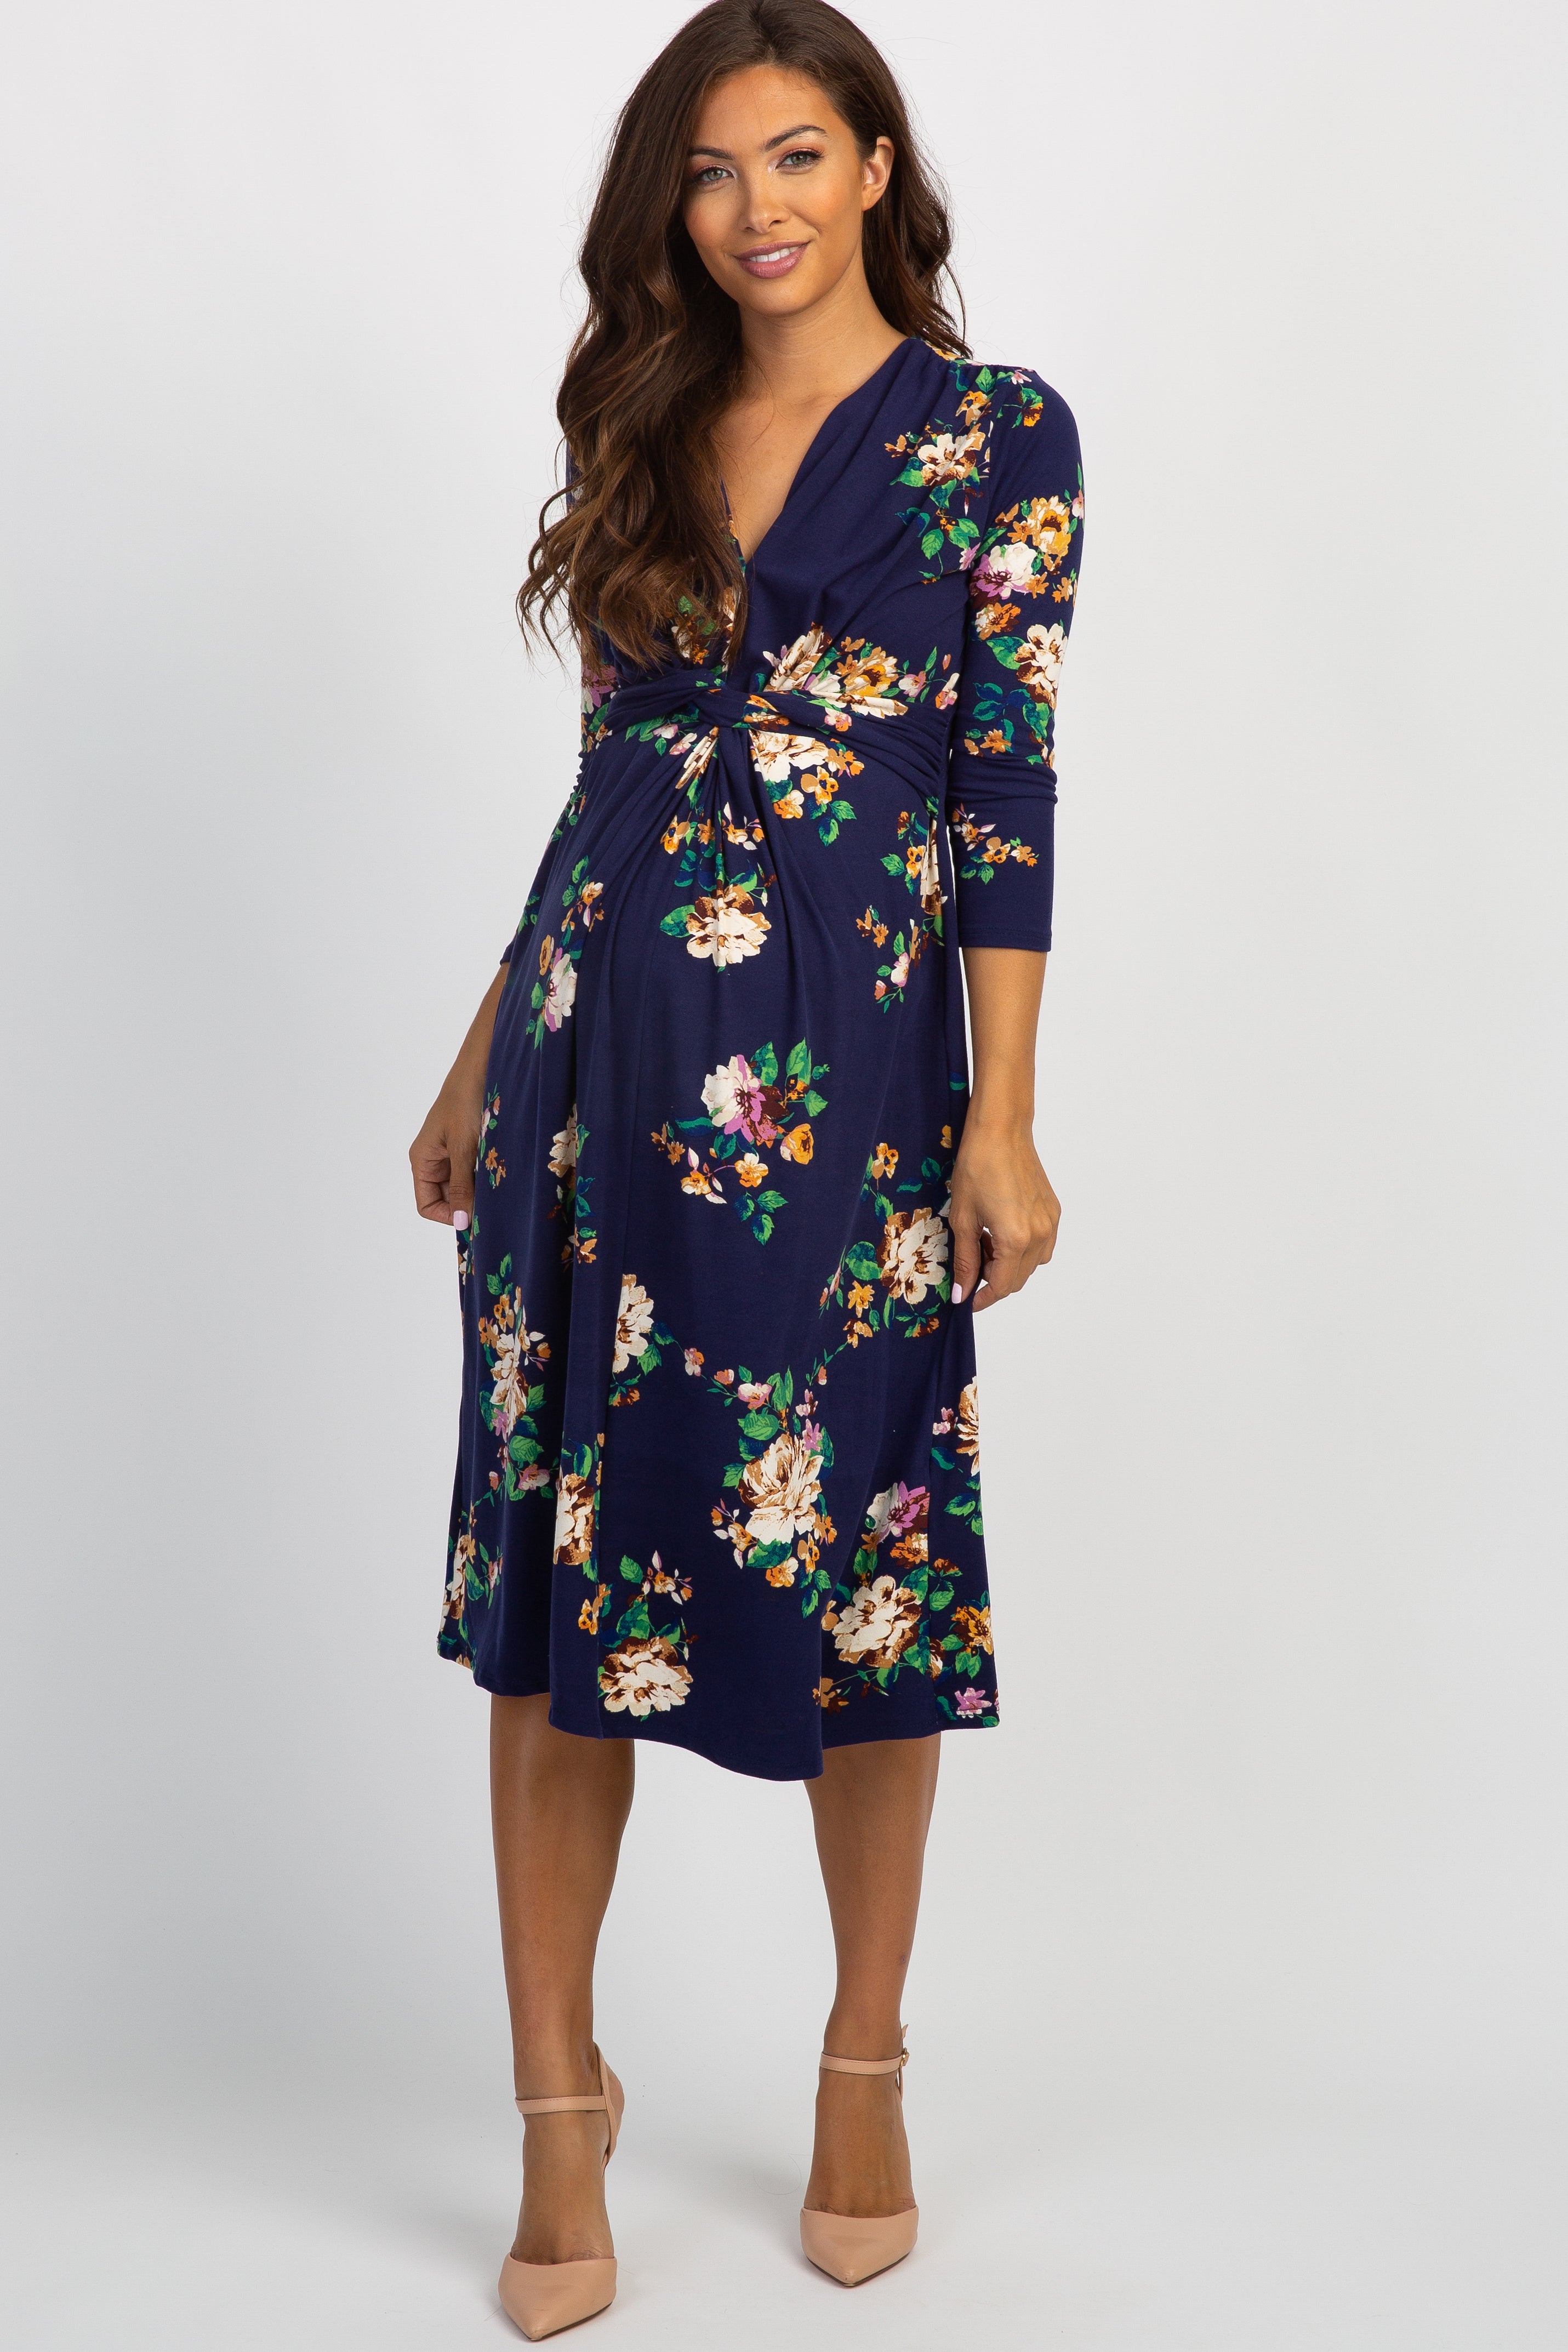 navy blue floral midi dress